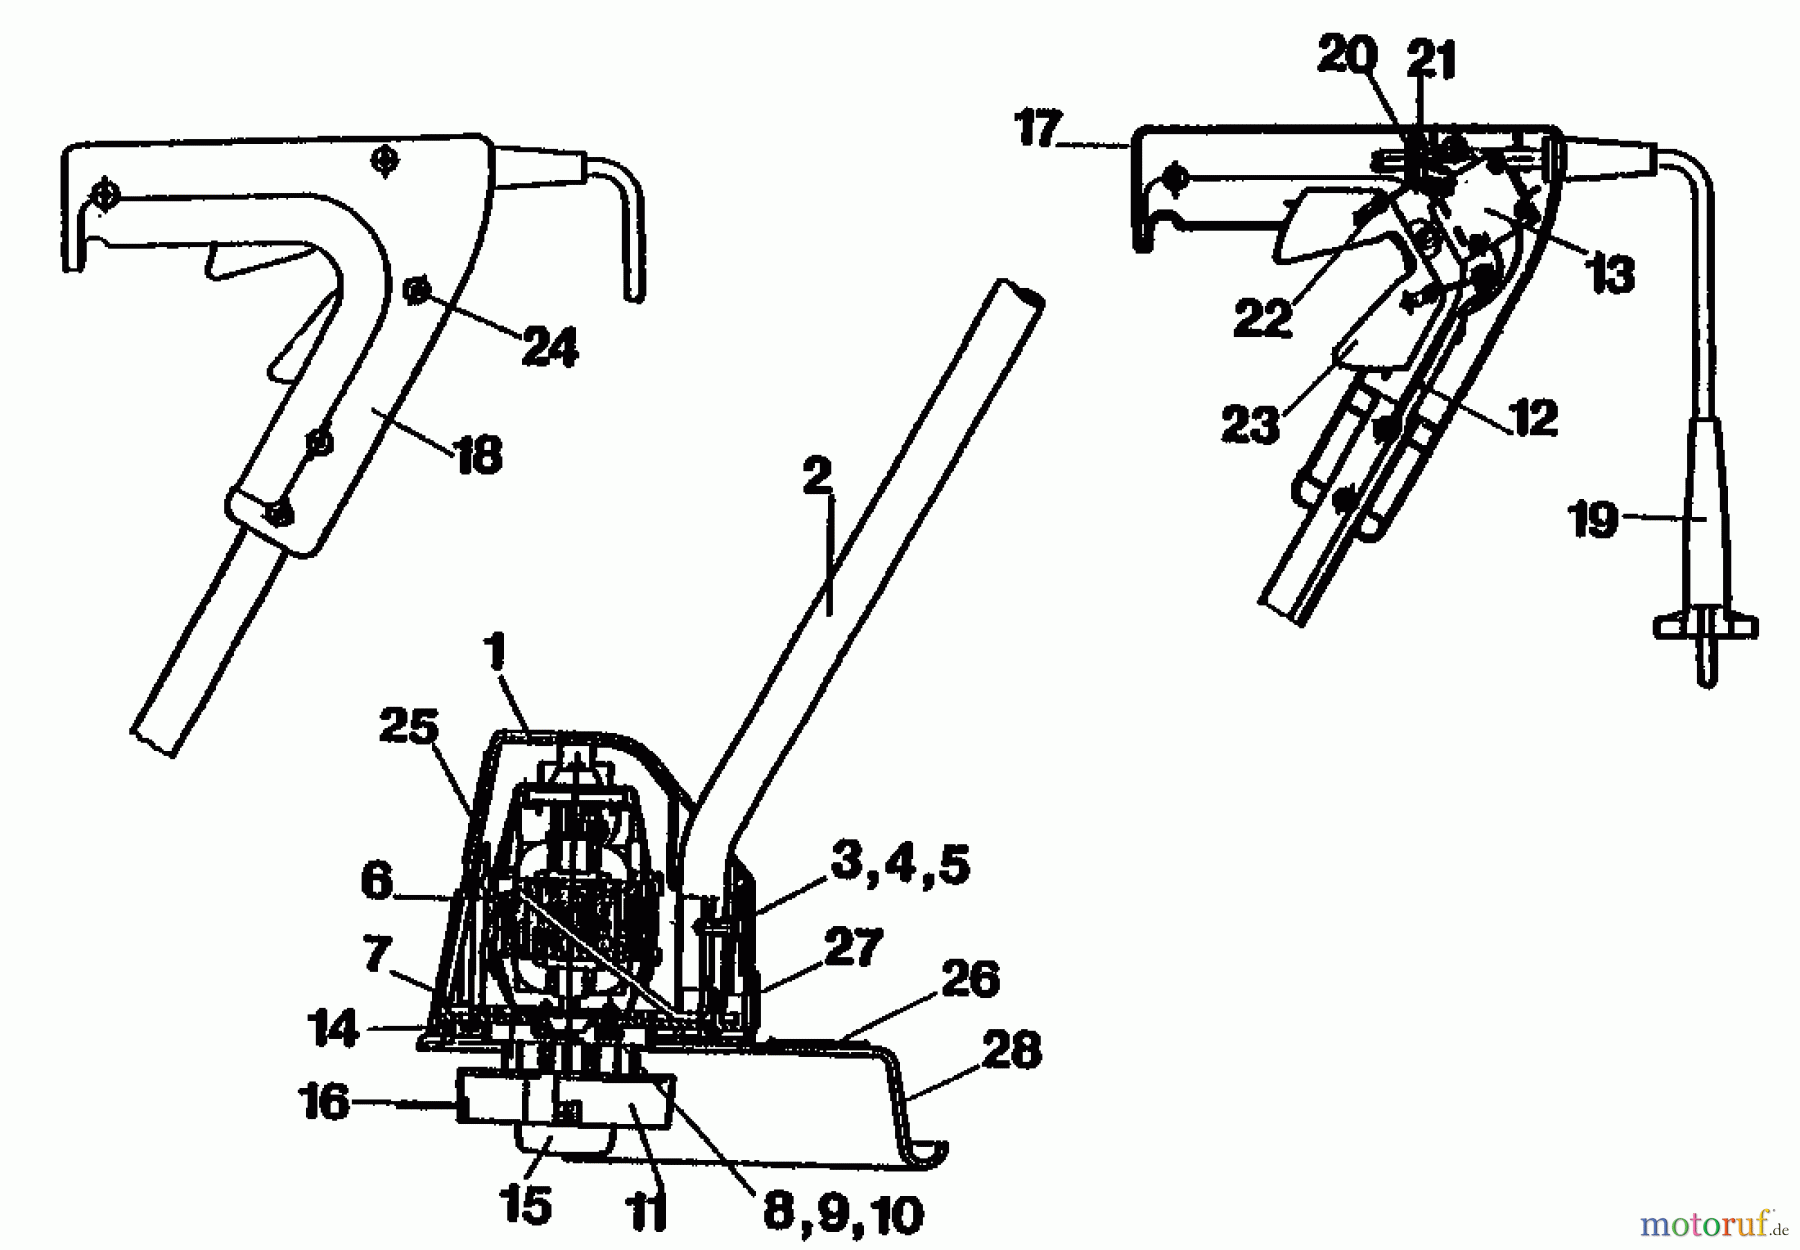  Golf Electric trimmer 320 RAPS 02858.06  (1991) Basic machine